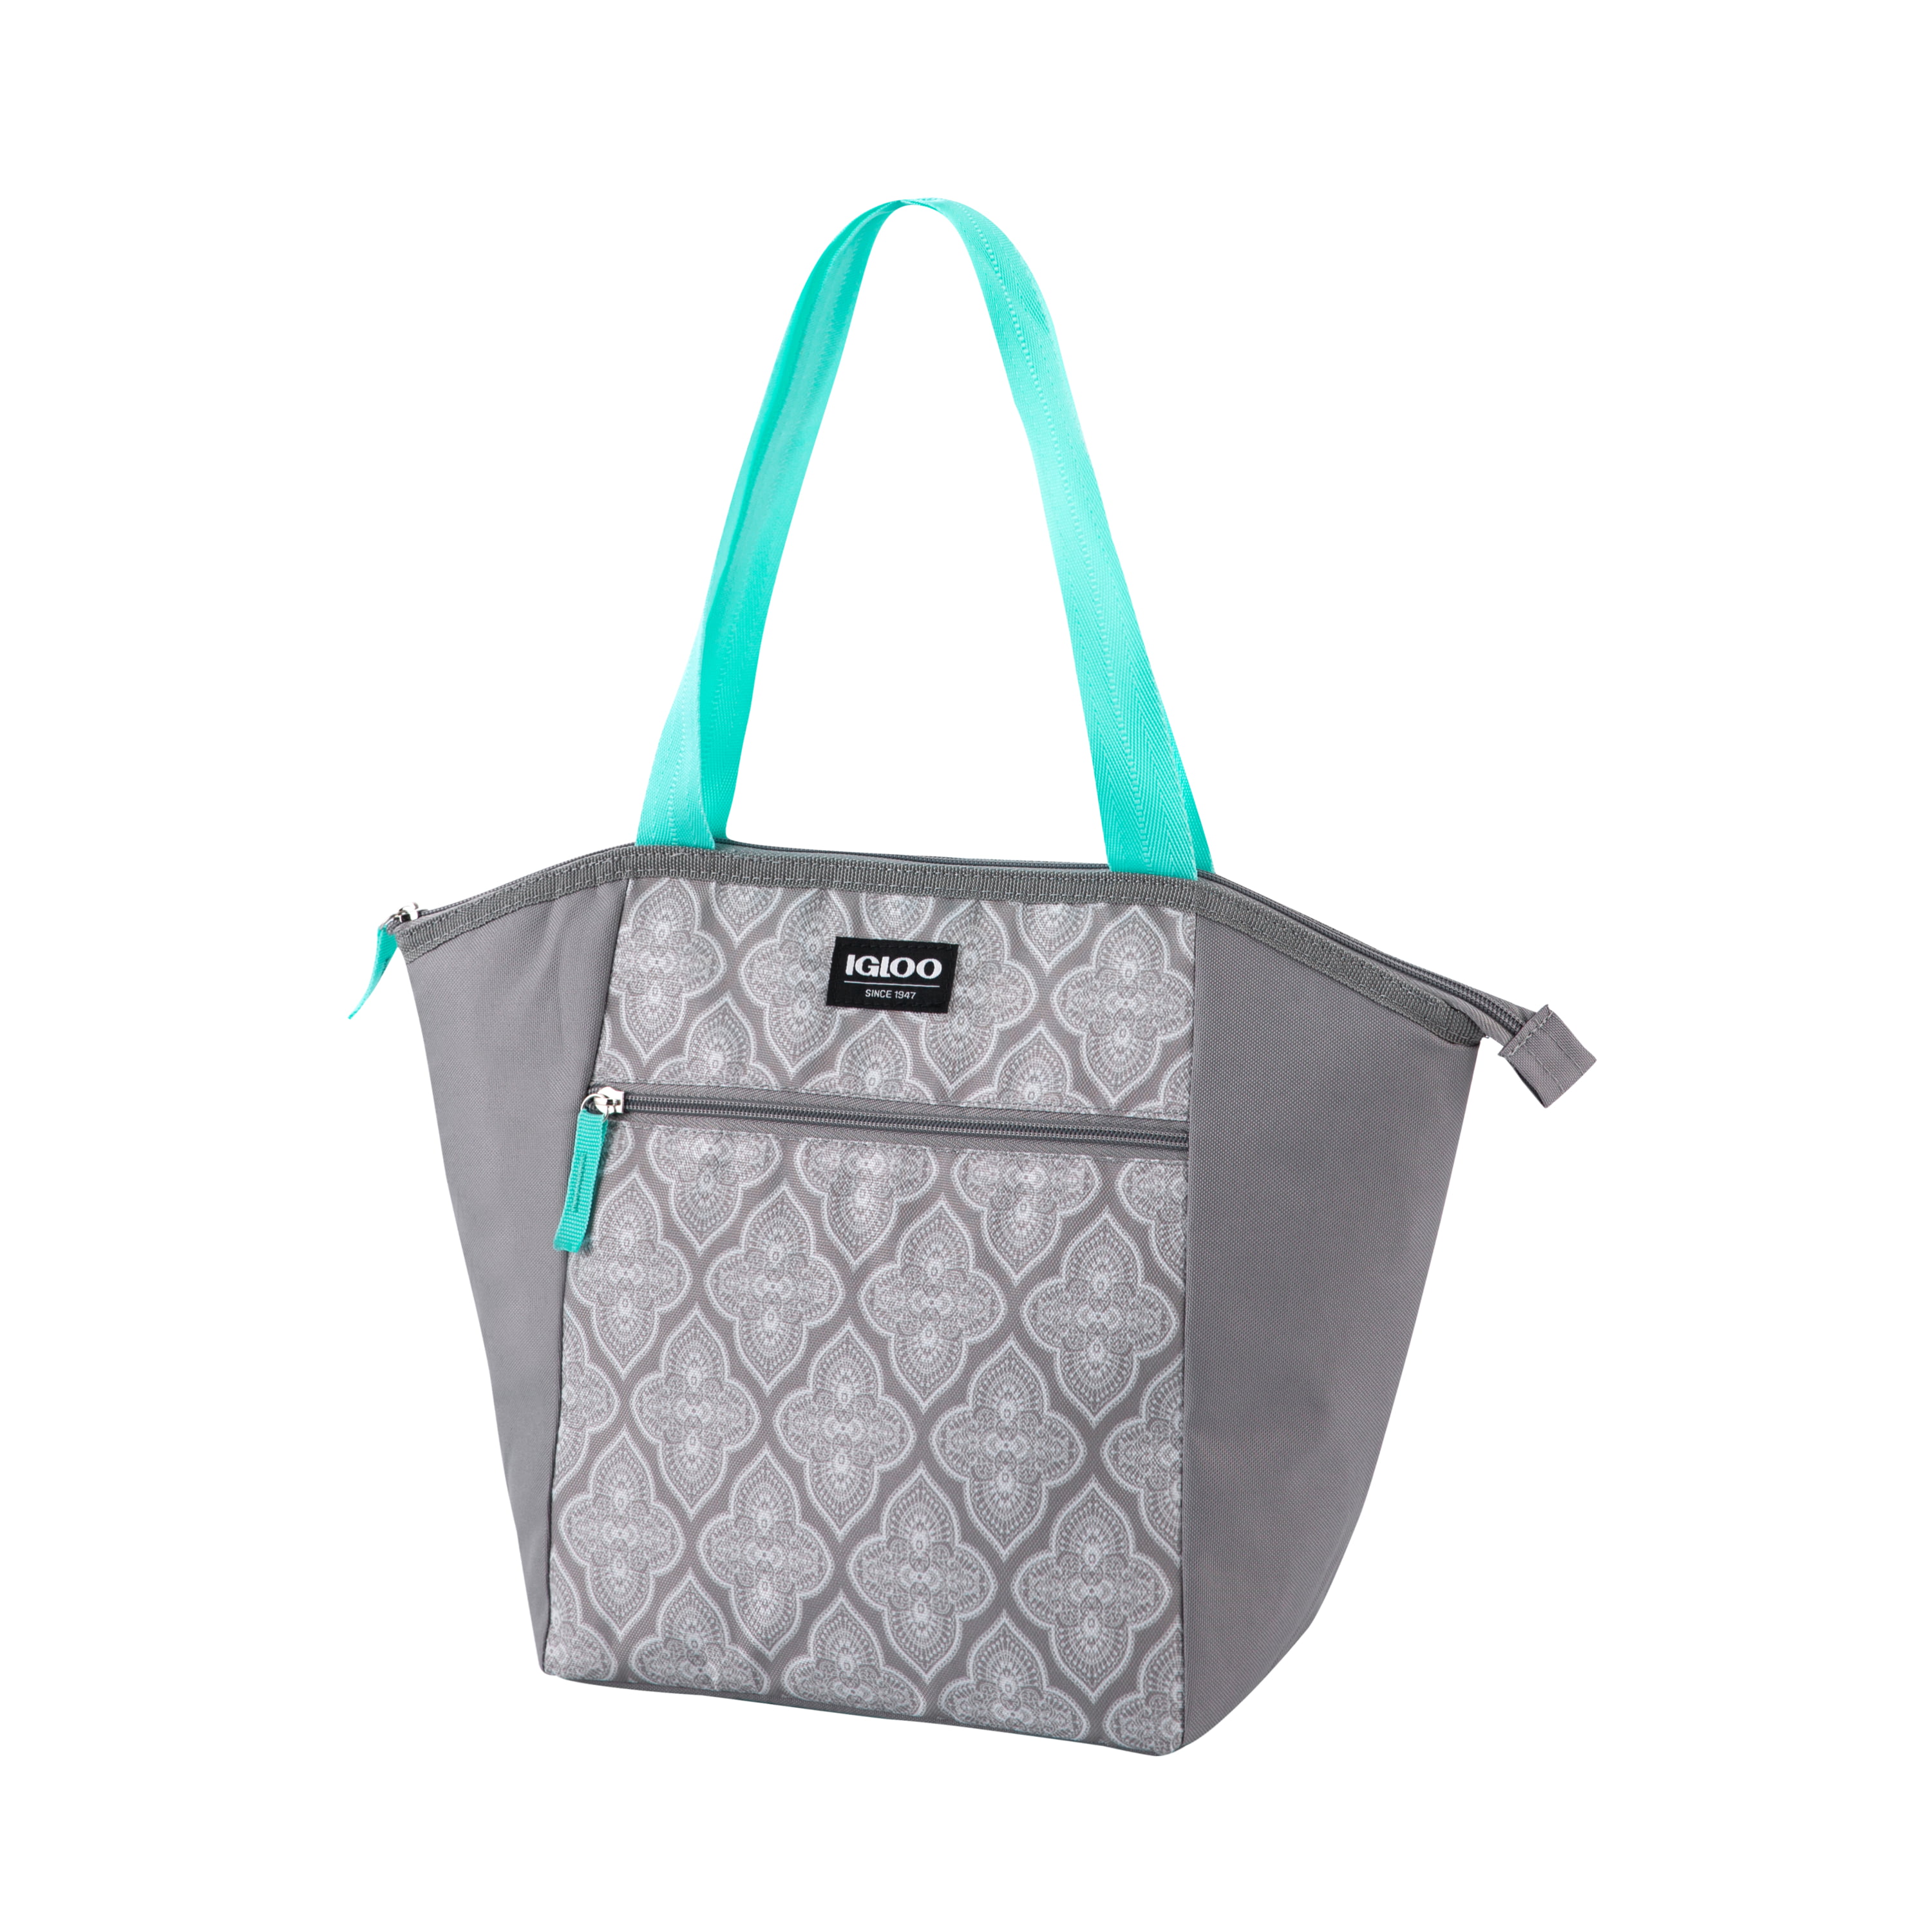 Igloo Essential Tote Bag Cooler - Gray 